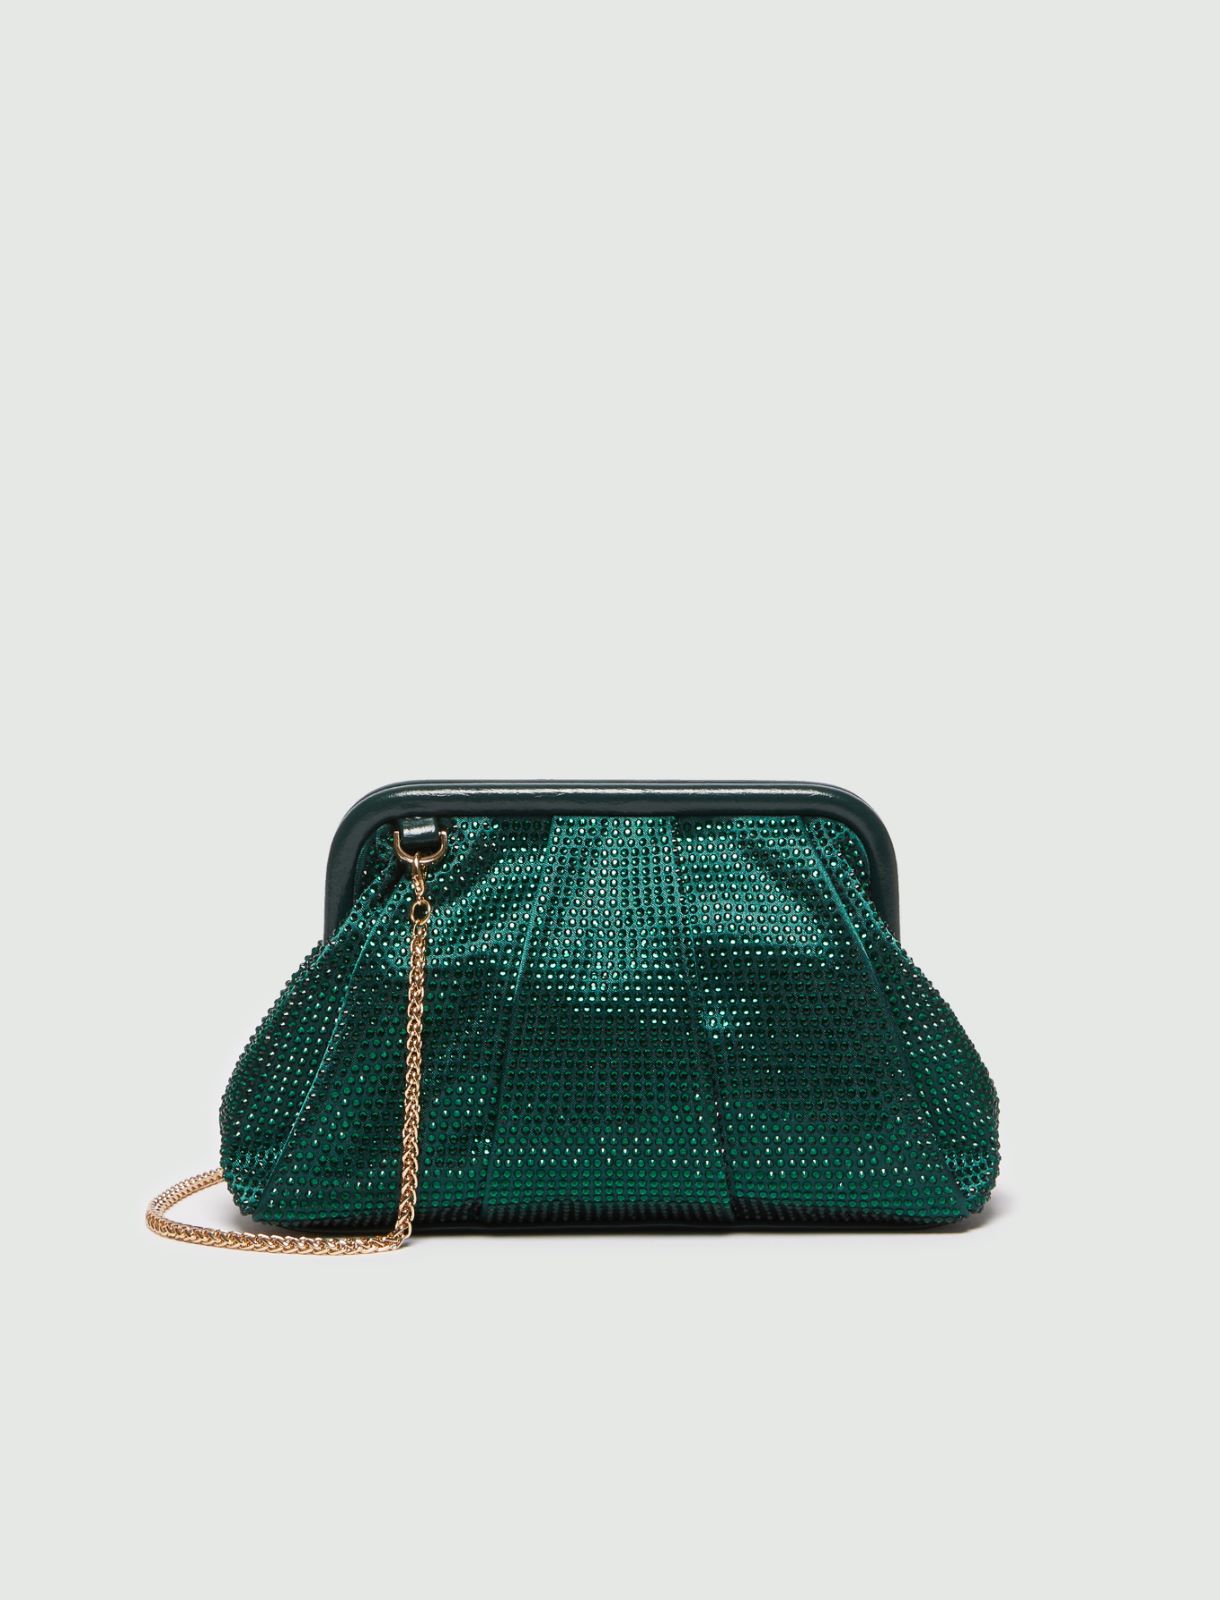 waterfall Cloud roller Rhinestone clutch bag, green | Marella